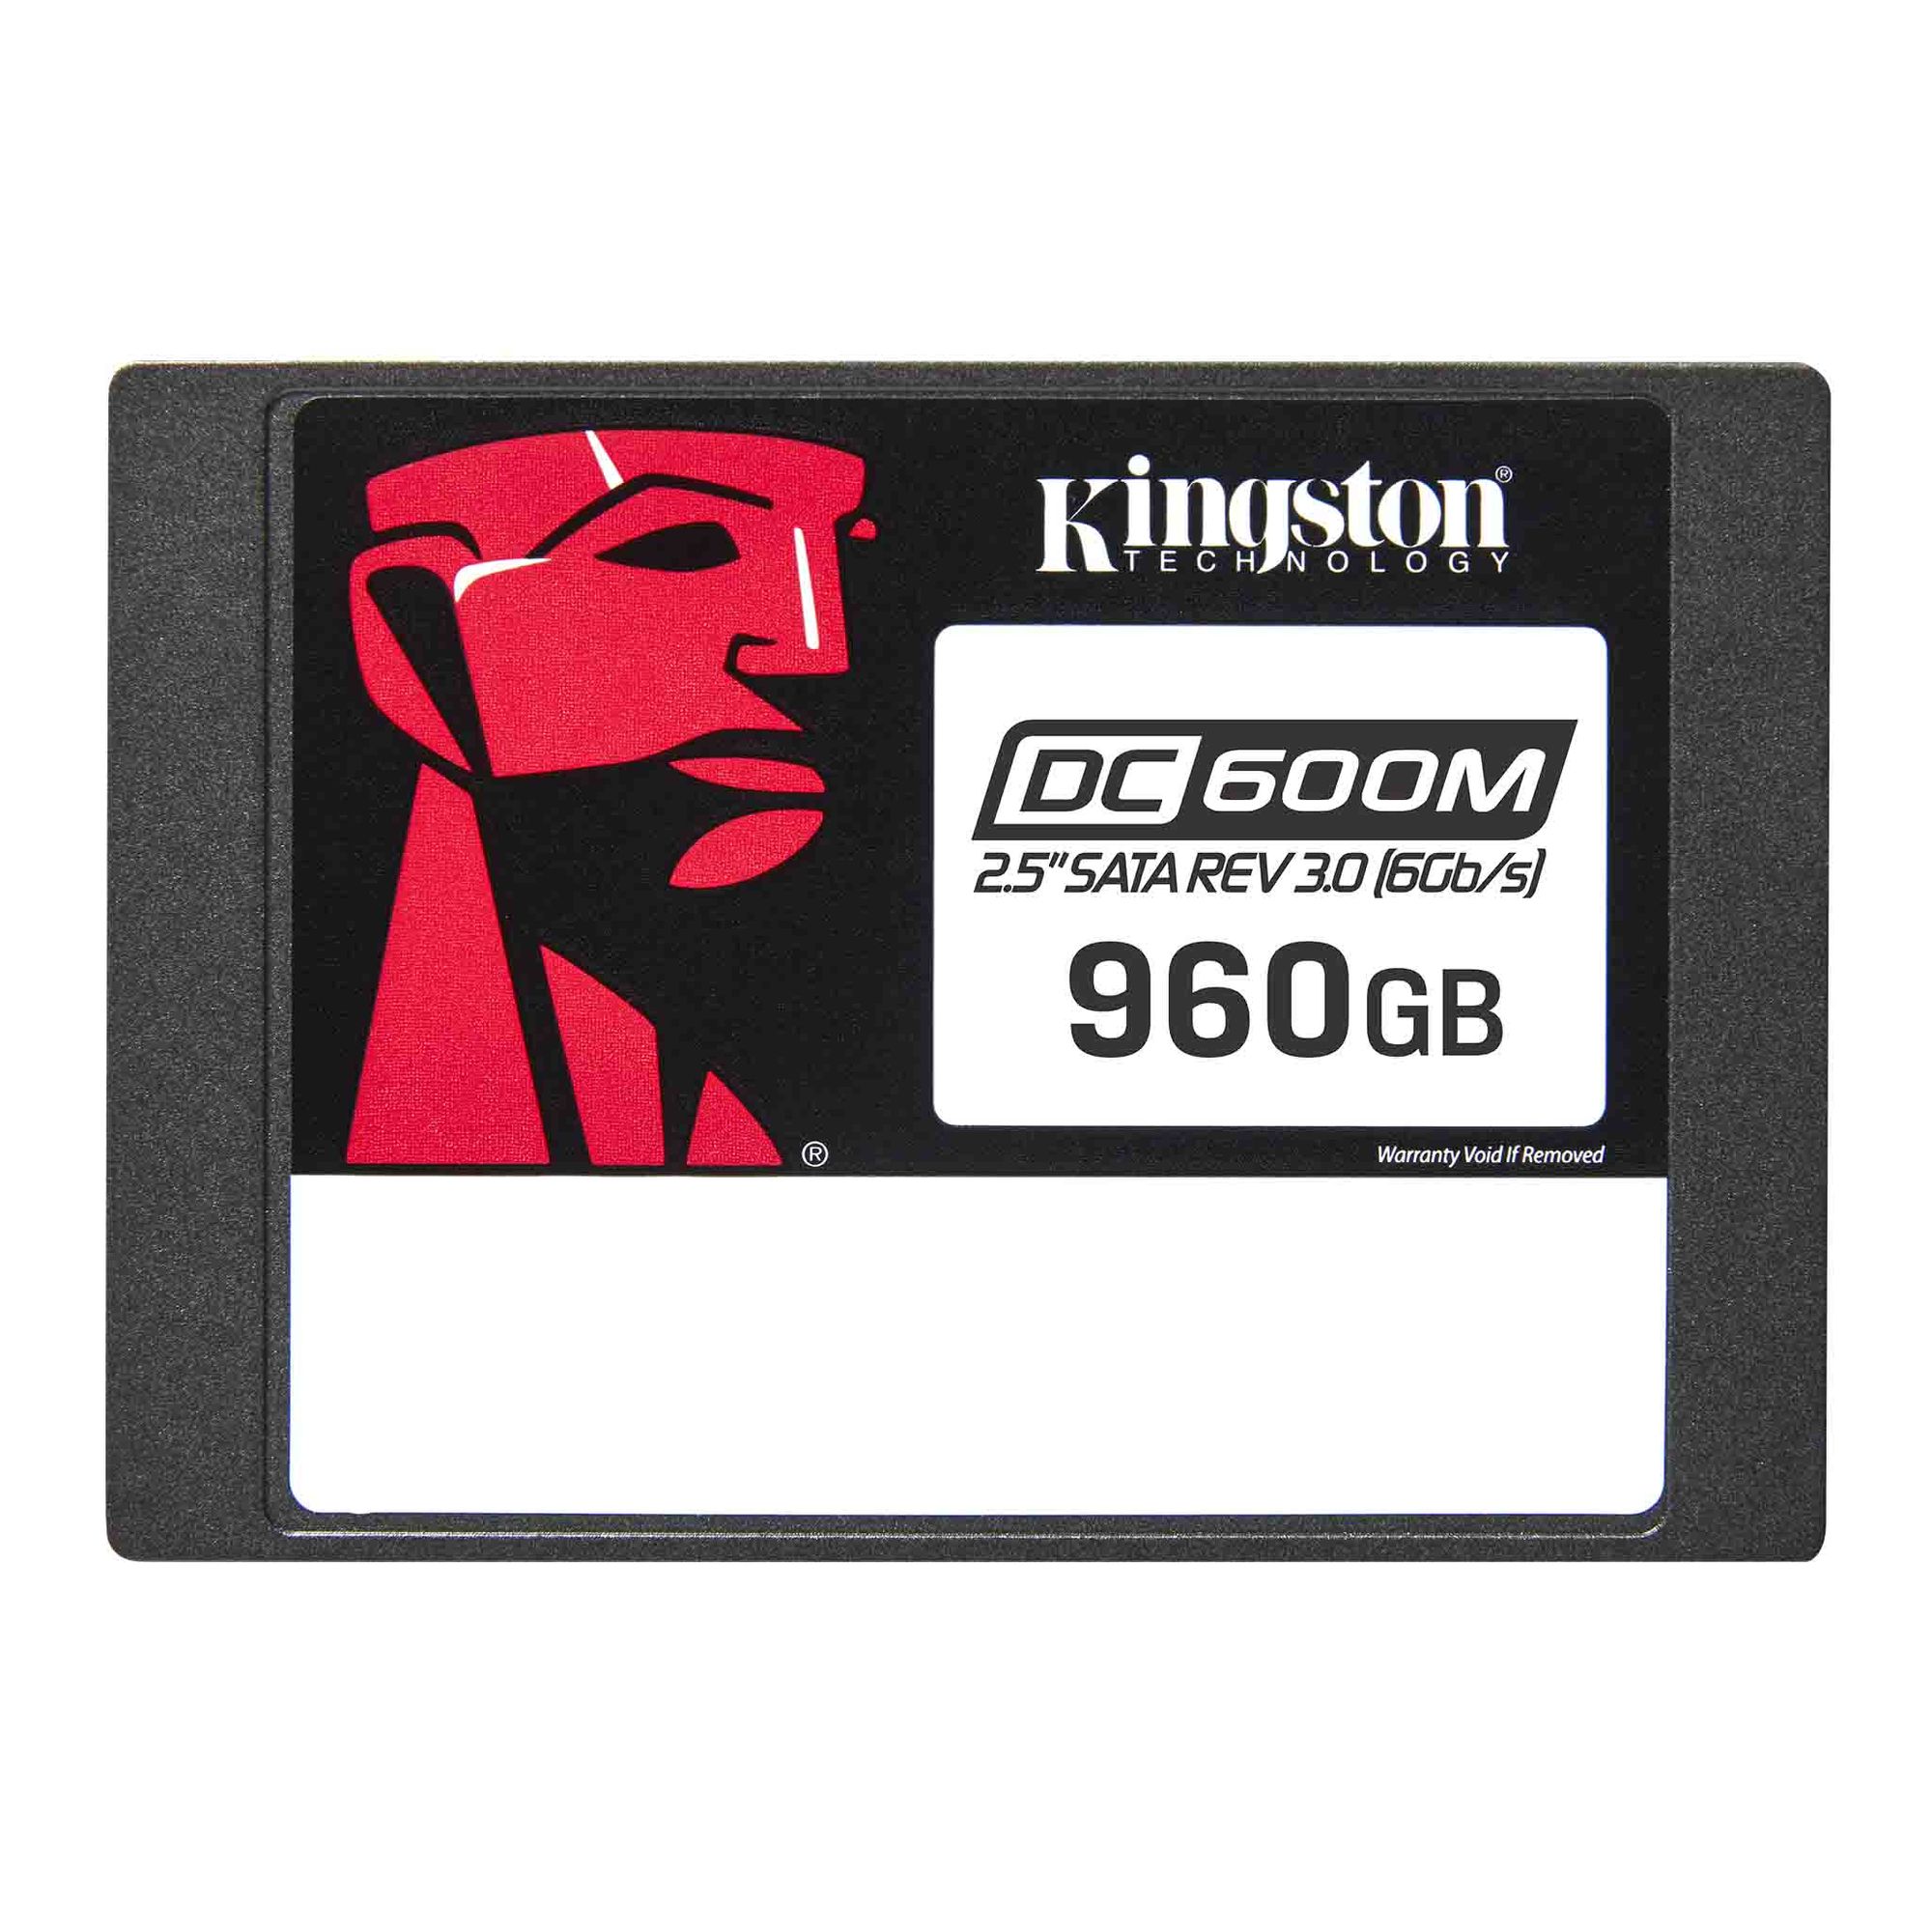 Накопитель SSD 2.5 Kingston Enterprise DC600M SATA 3 960GB (SEDC600M/960G) накопитель ssd 2 5 kingston enterprise dc600m sata 3 960gb sedc600m 960g